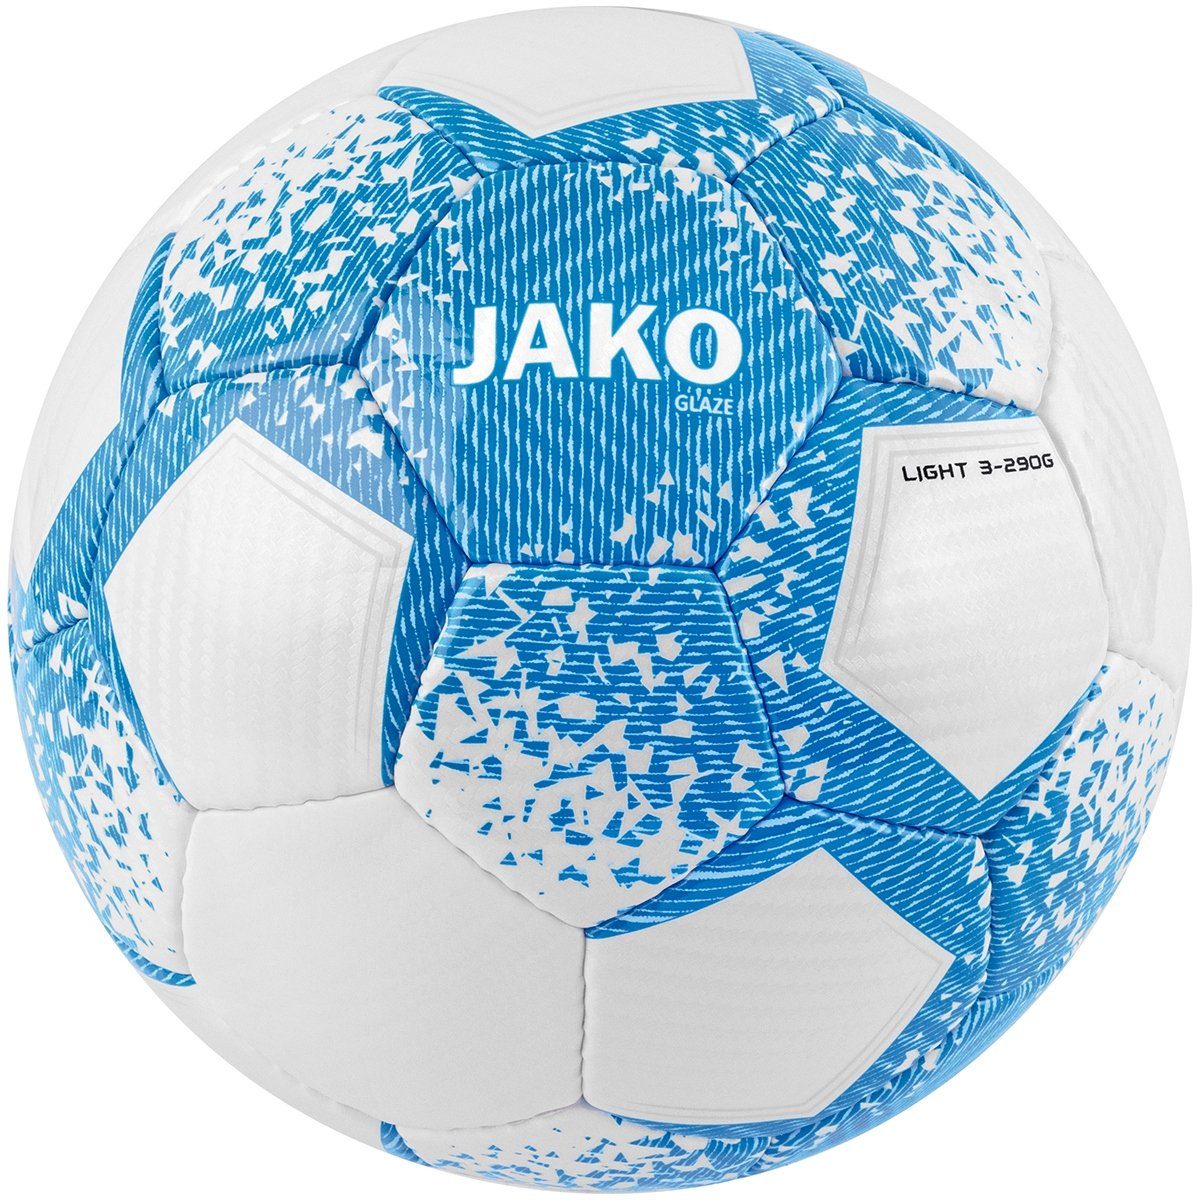 weiß/JAKO lightblue-290g Fußball Jako blau/